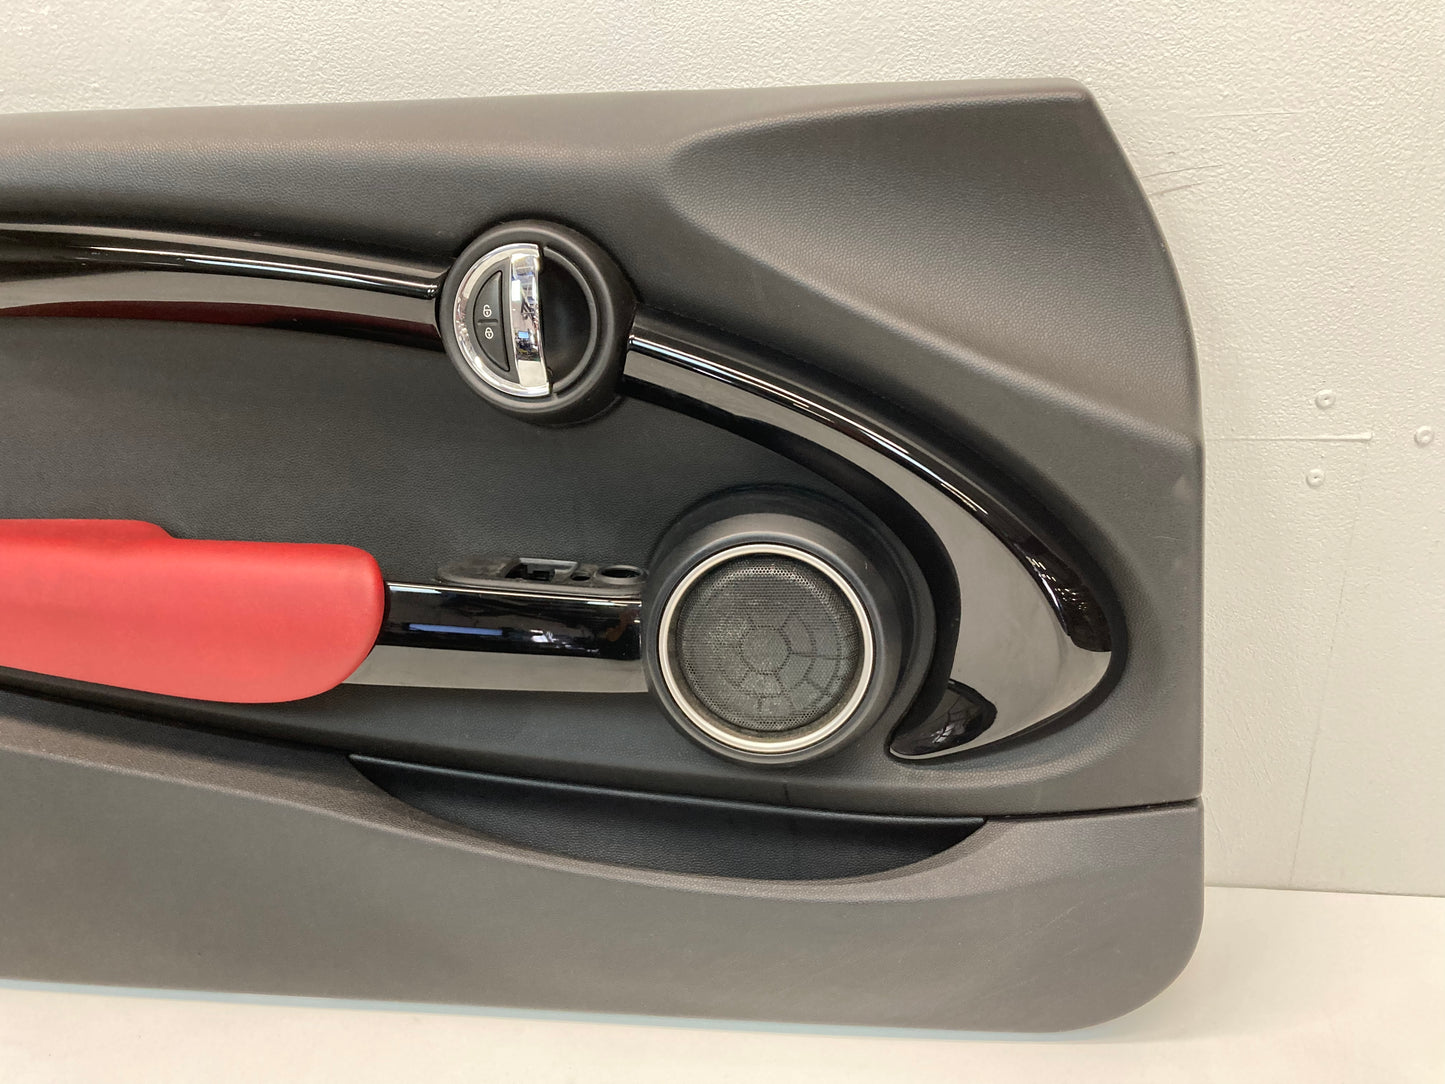 Mini Cooper Front Door Panels Carbon Black, Glowing Red 2014-2019 F56 F57 390